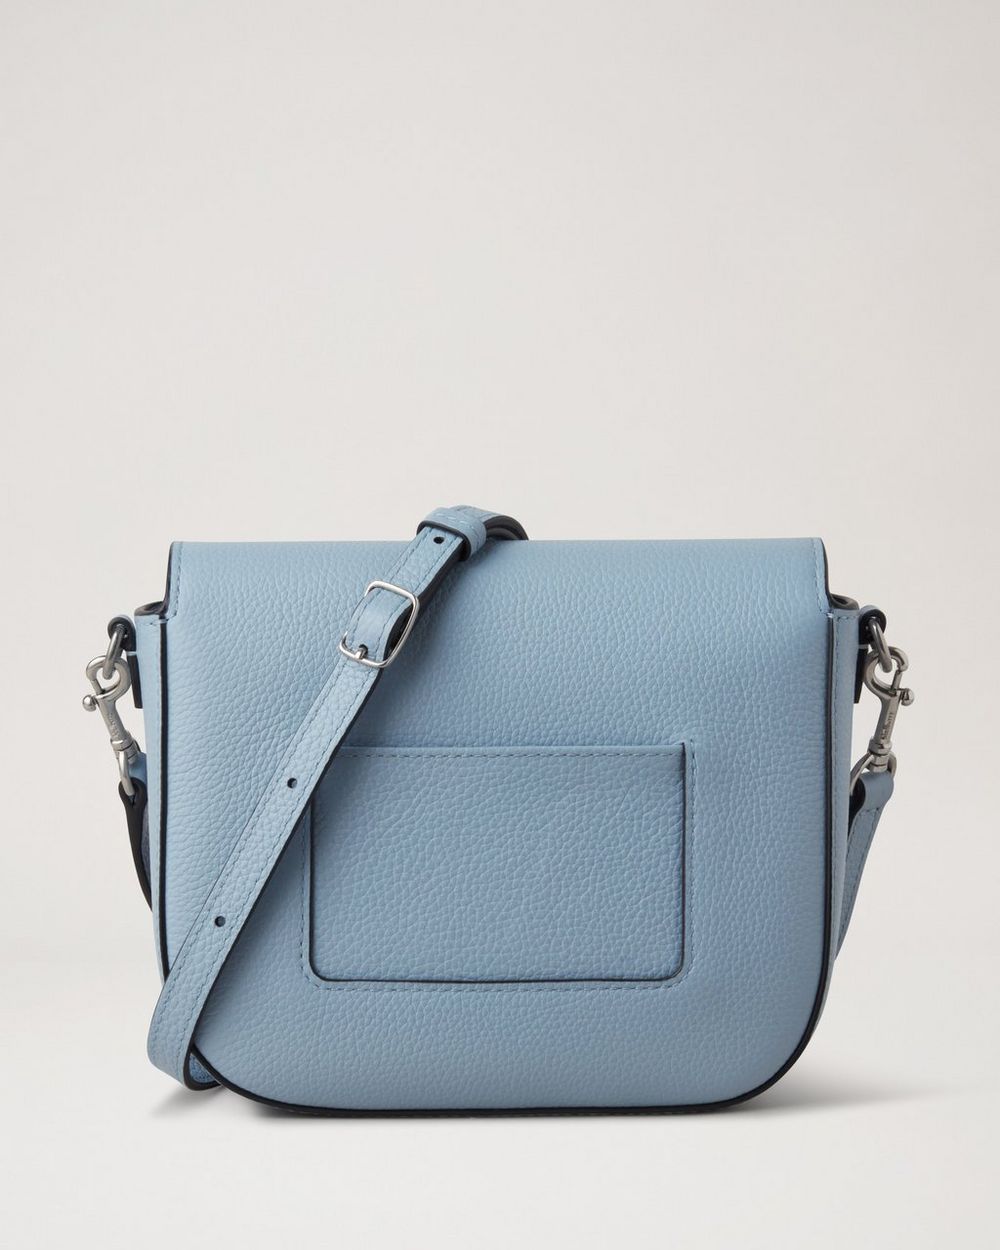 Buy Louis Vuitton Lock Top Handle Light Black Sling Bag - Online